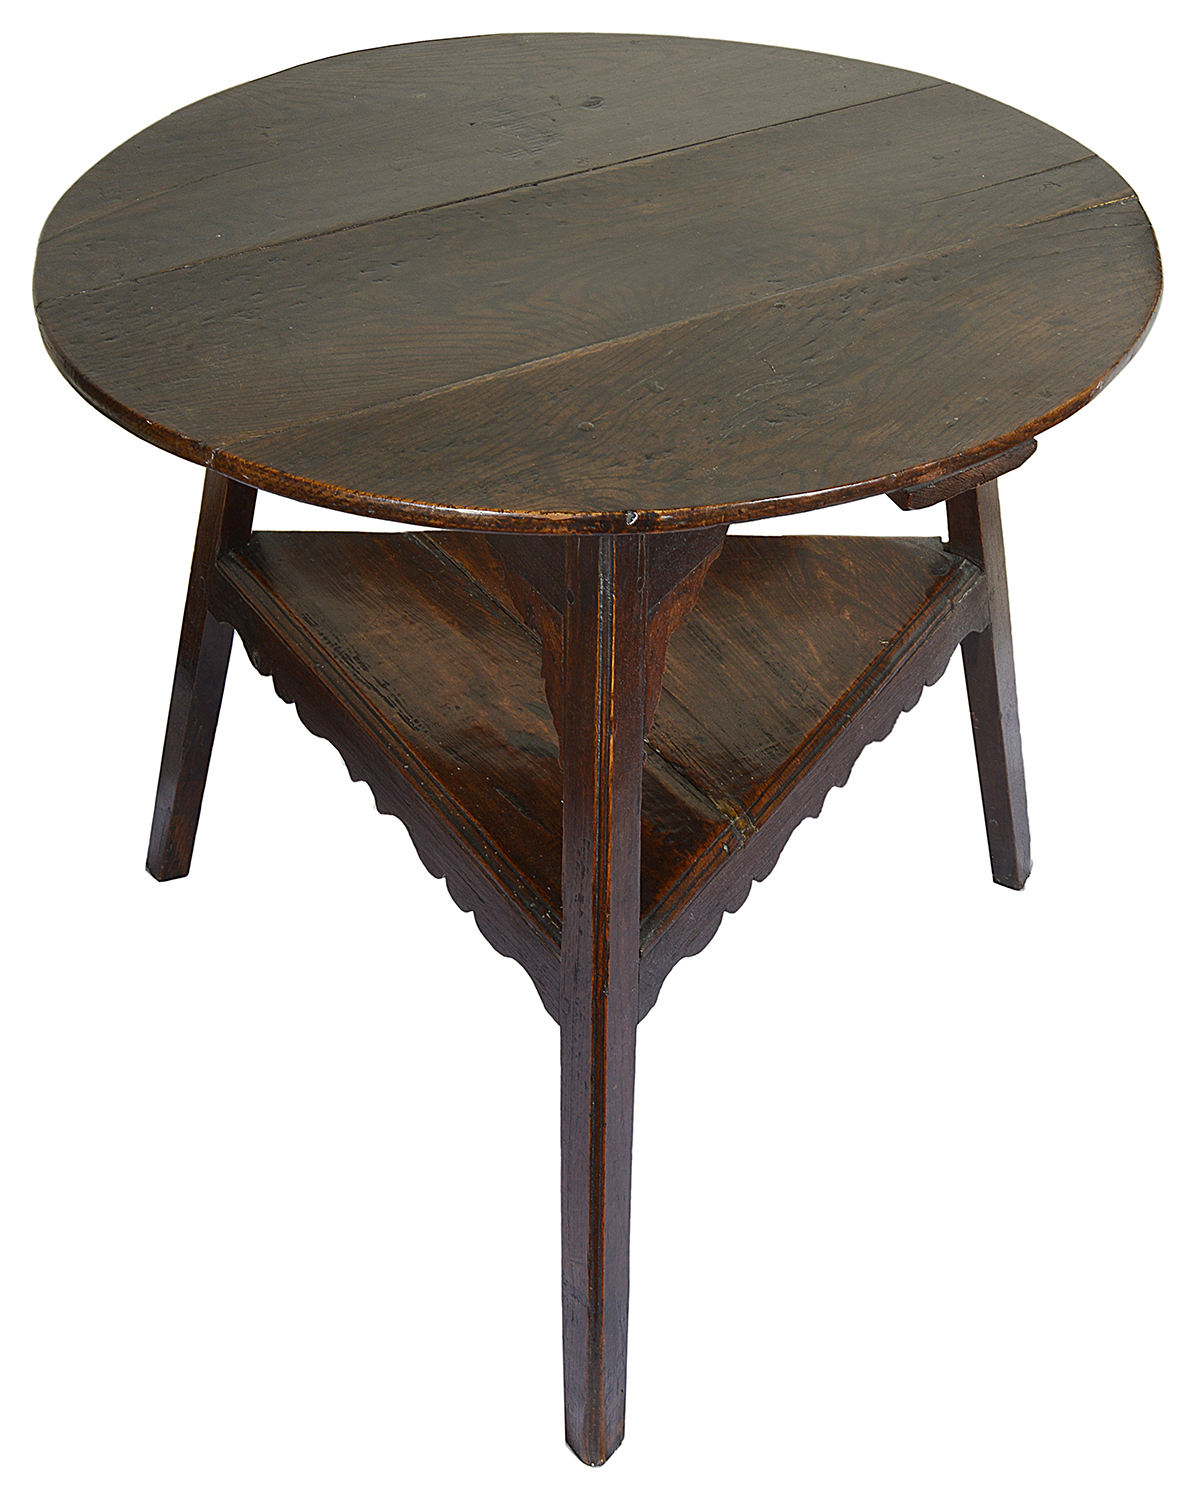 A George III oak cricket table